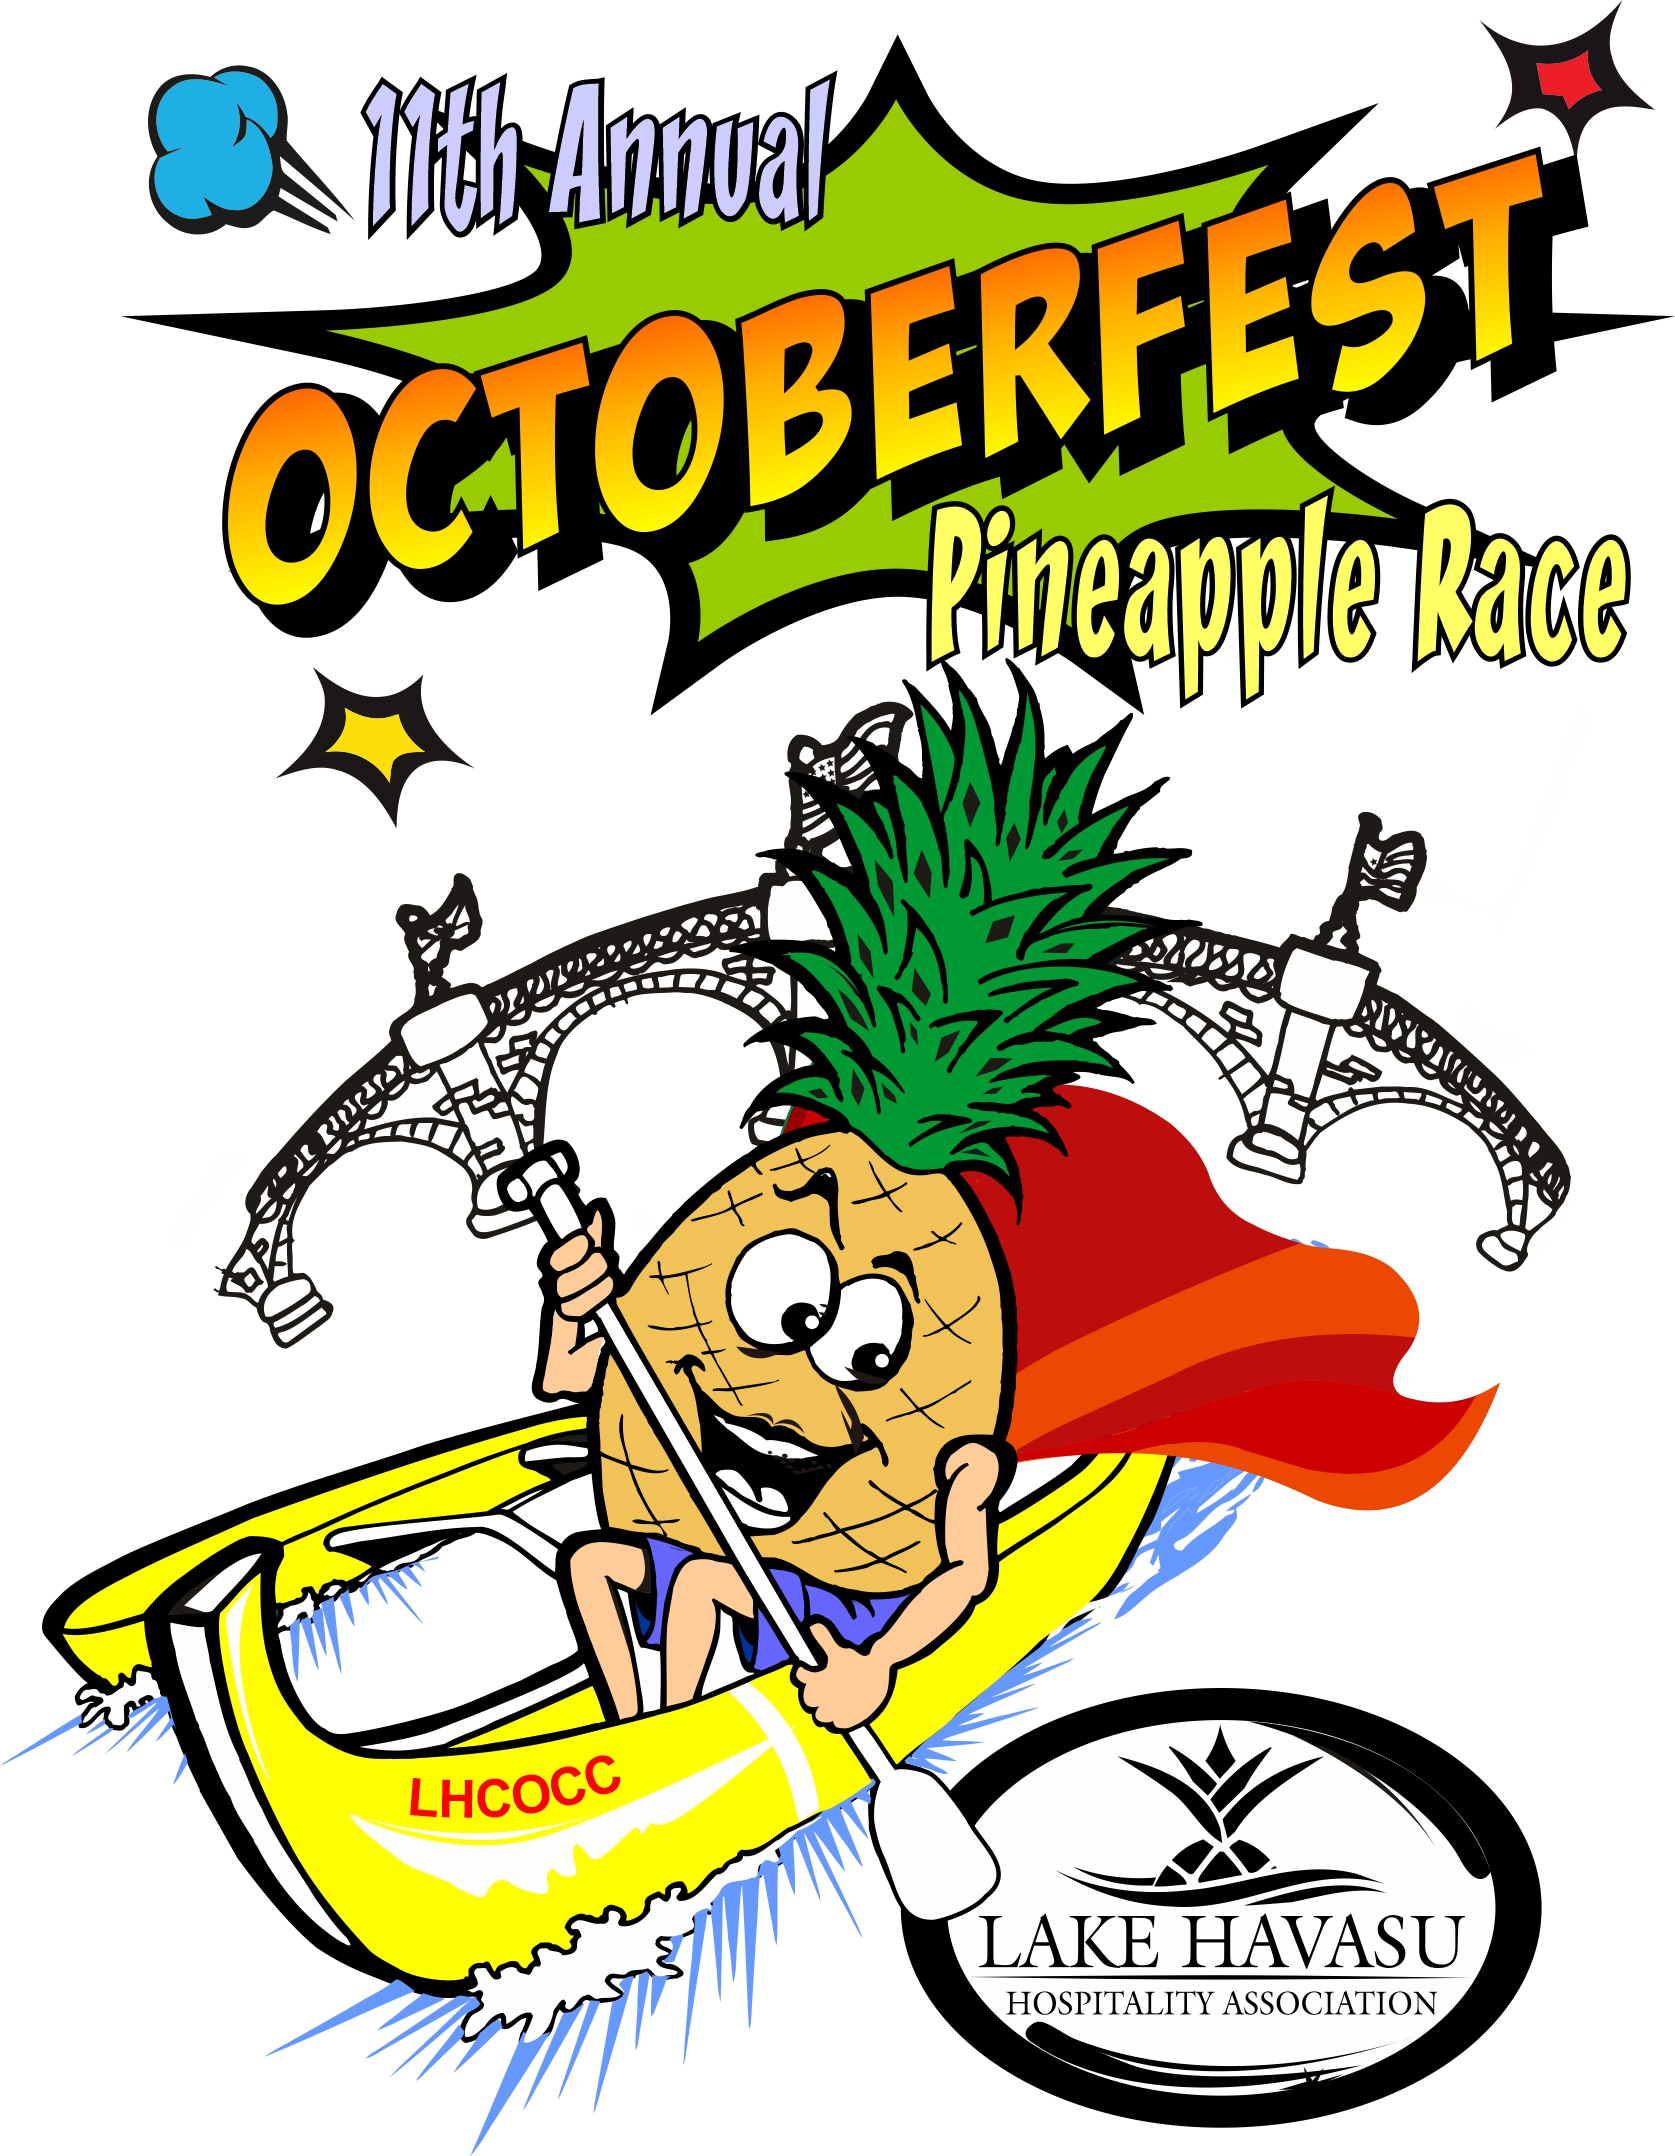 11th Annual Octoberfest Pineapple Race